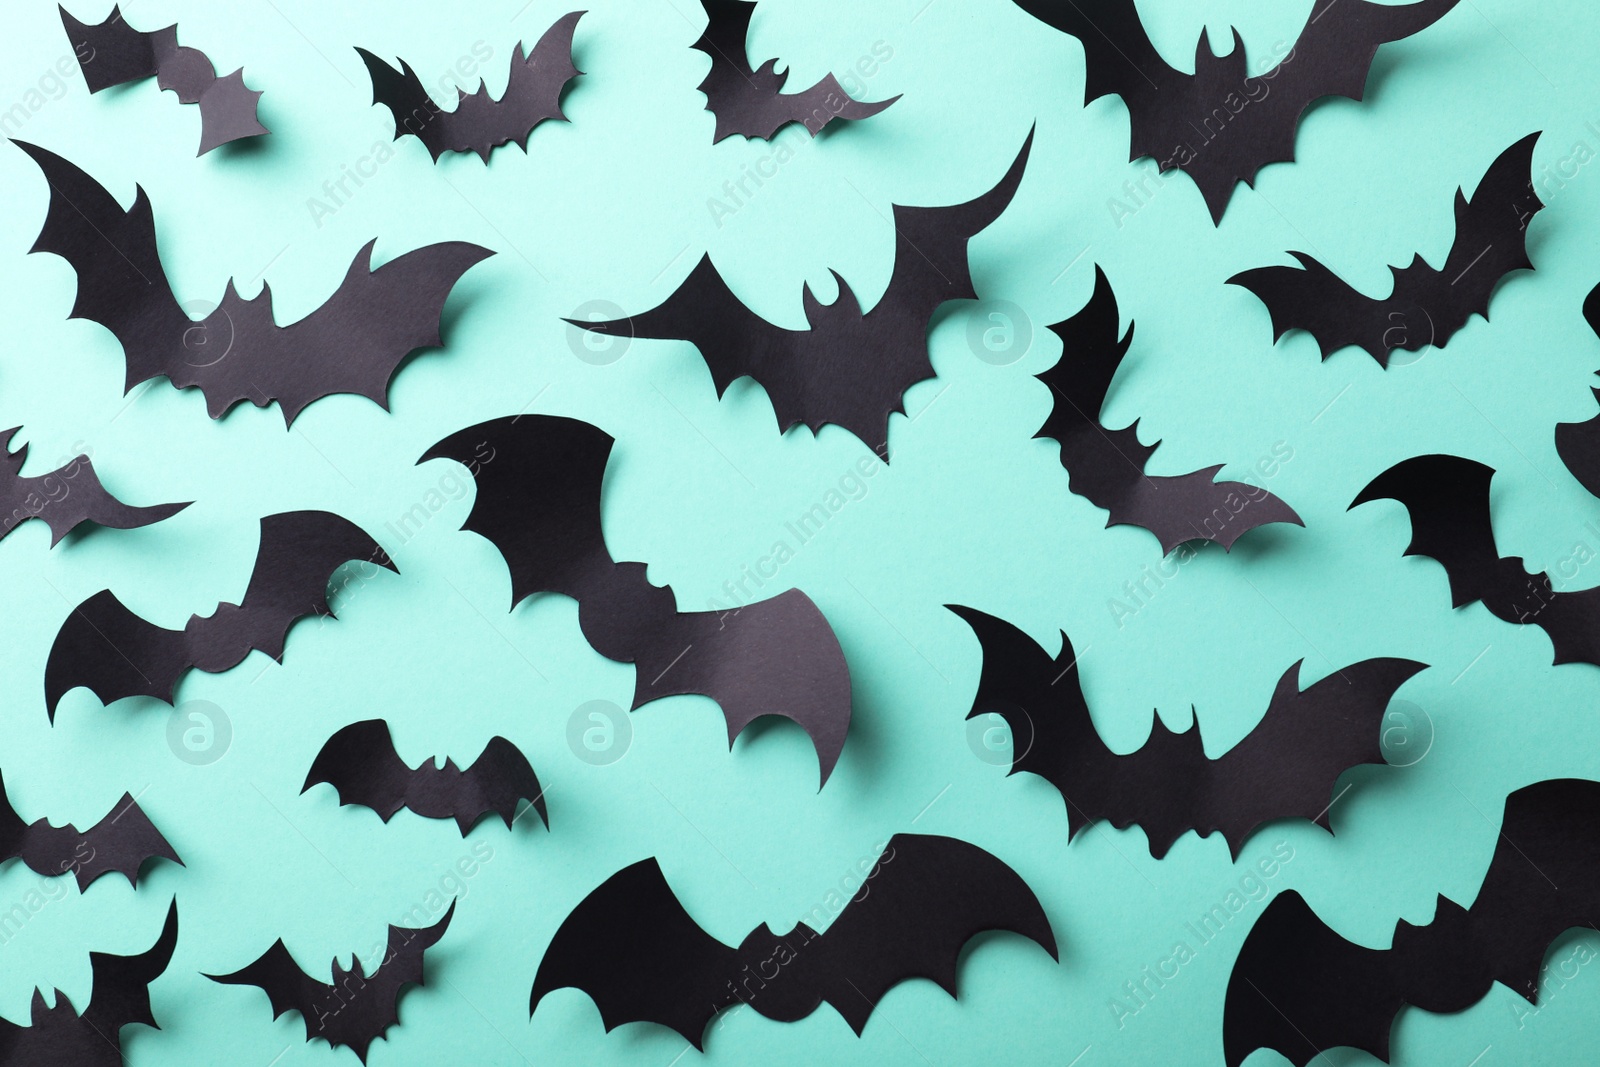 Photo of Many black paper bats on light blue background, flat lay. Halloween decor